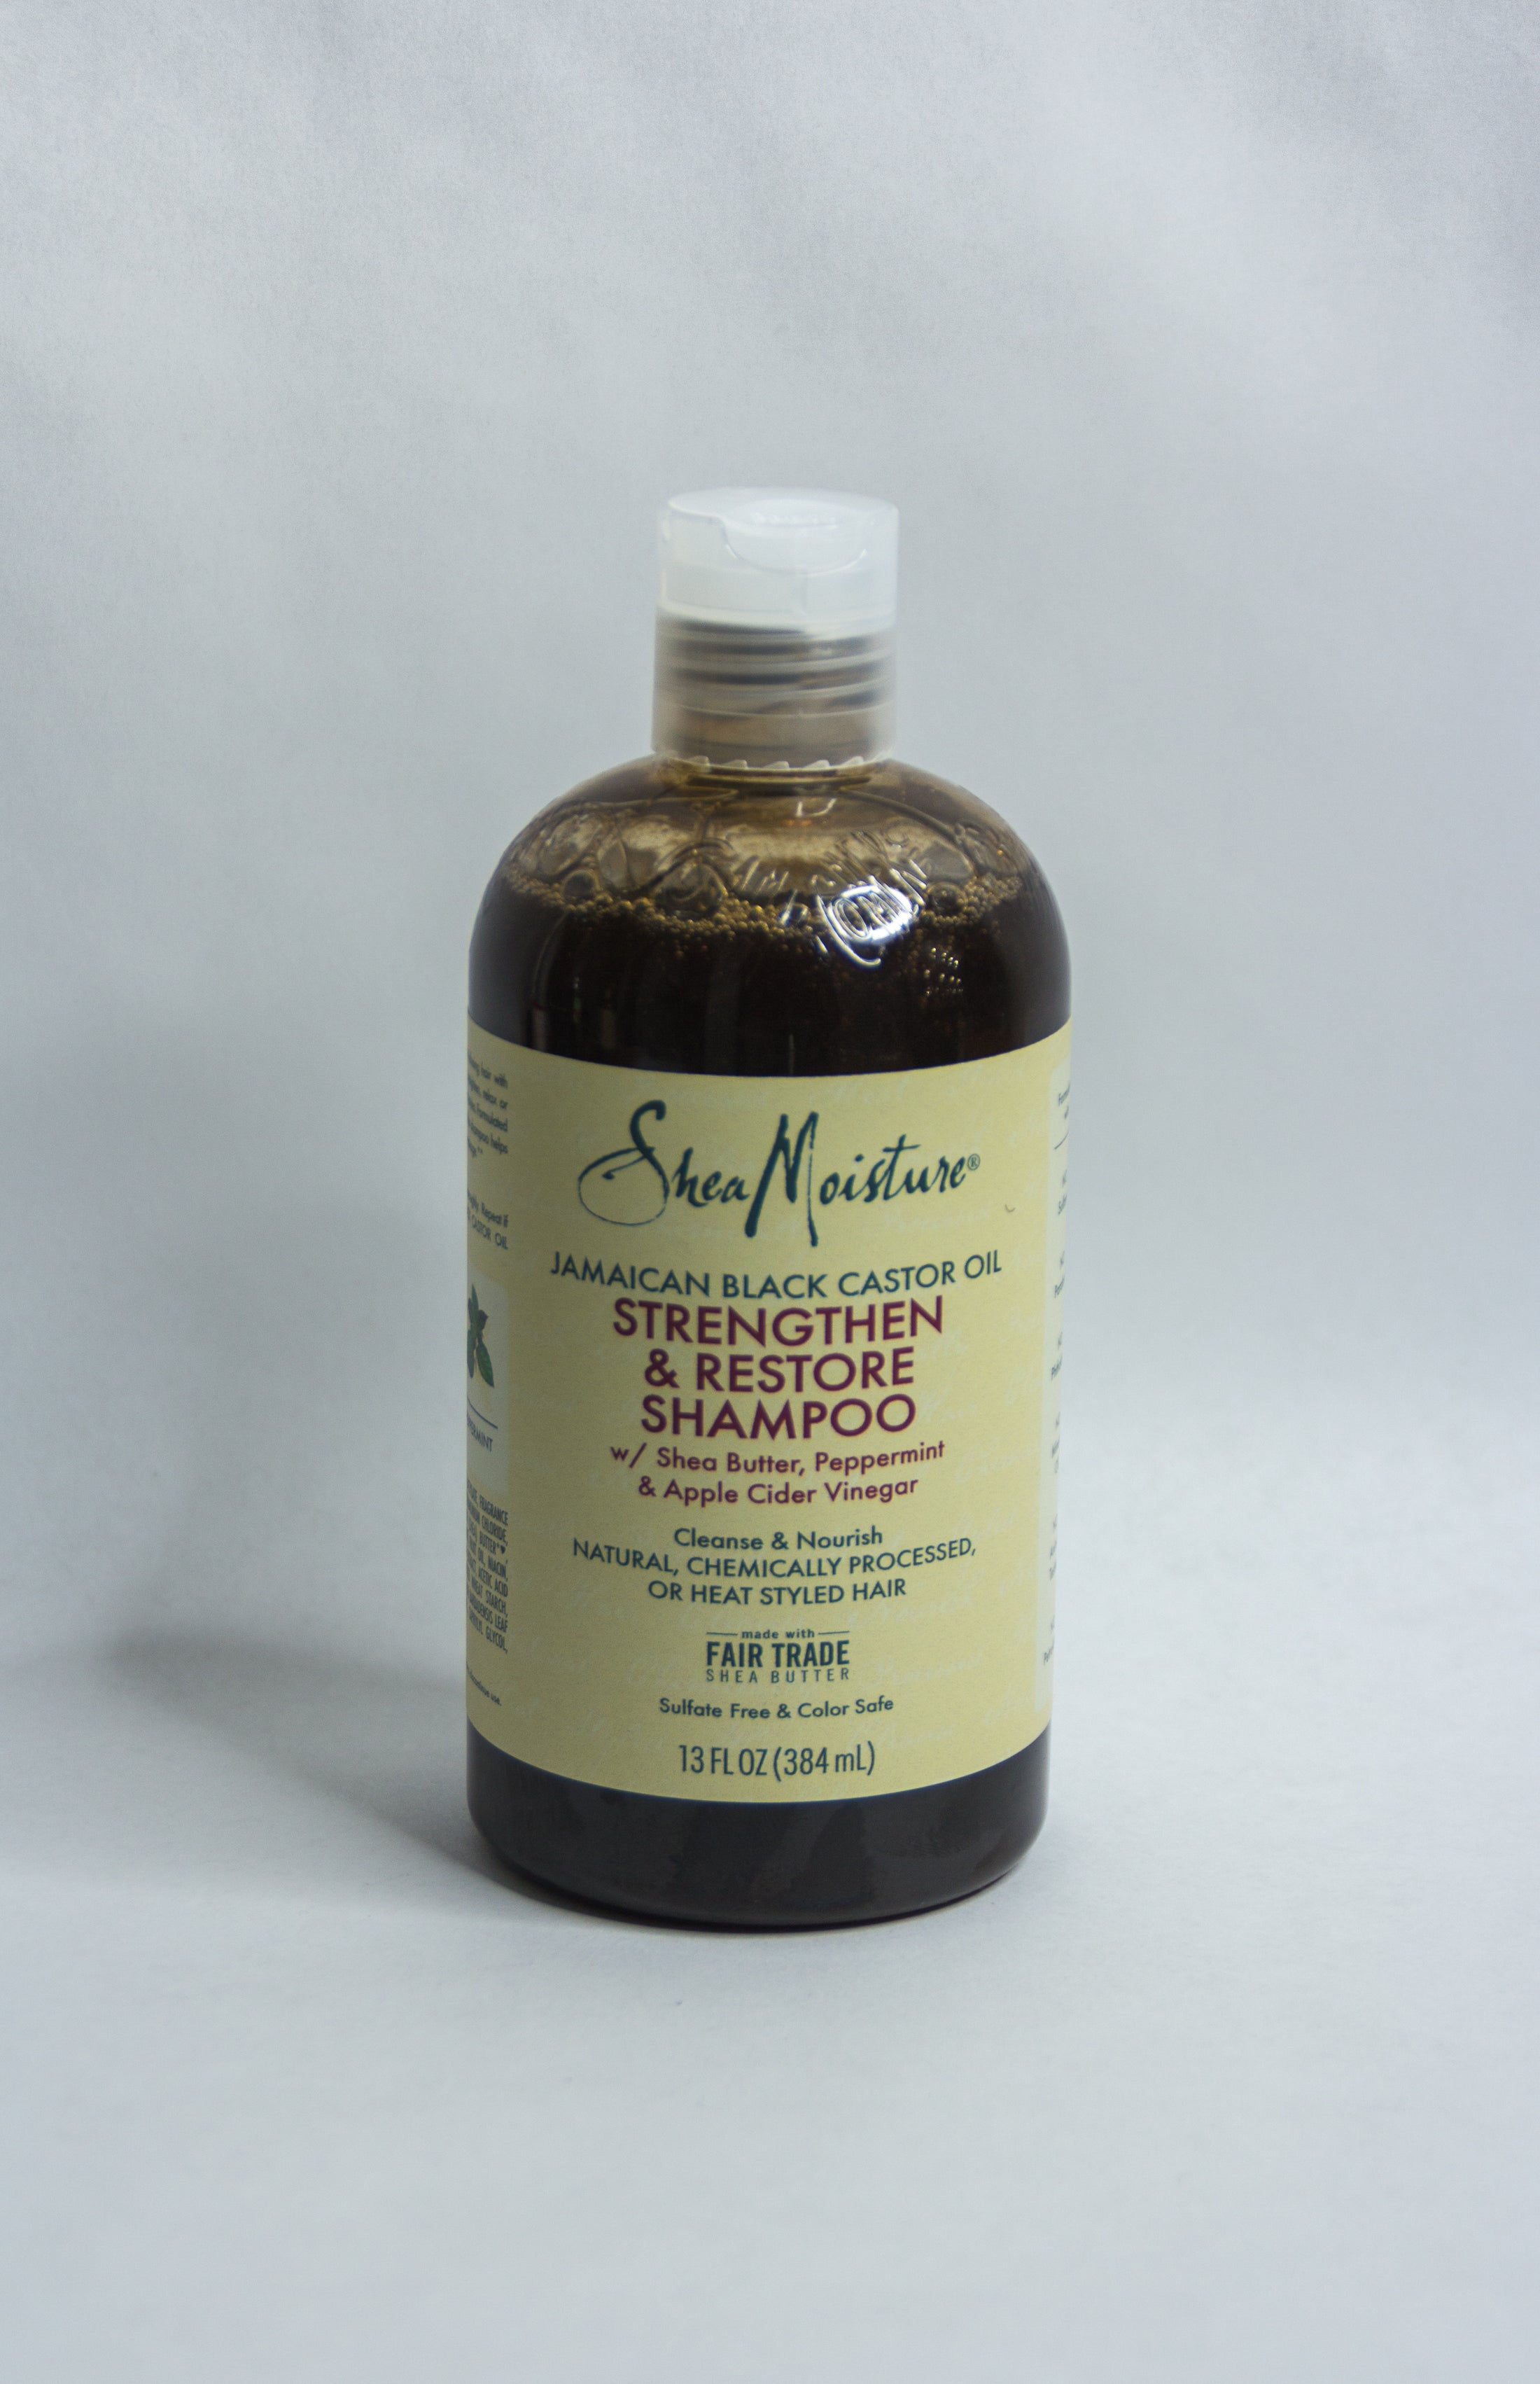 Shea moisture ( Jamaican black castor oil ) Strengthen & Restore Shampoo